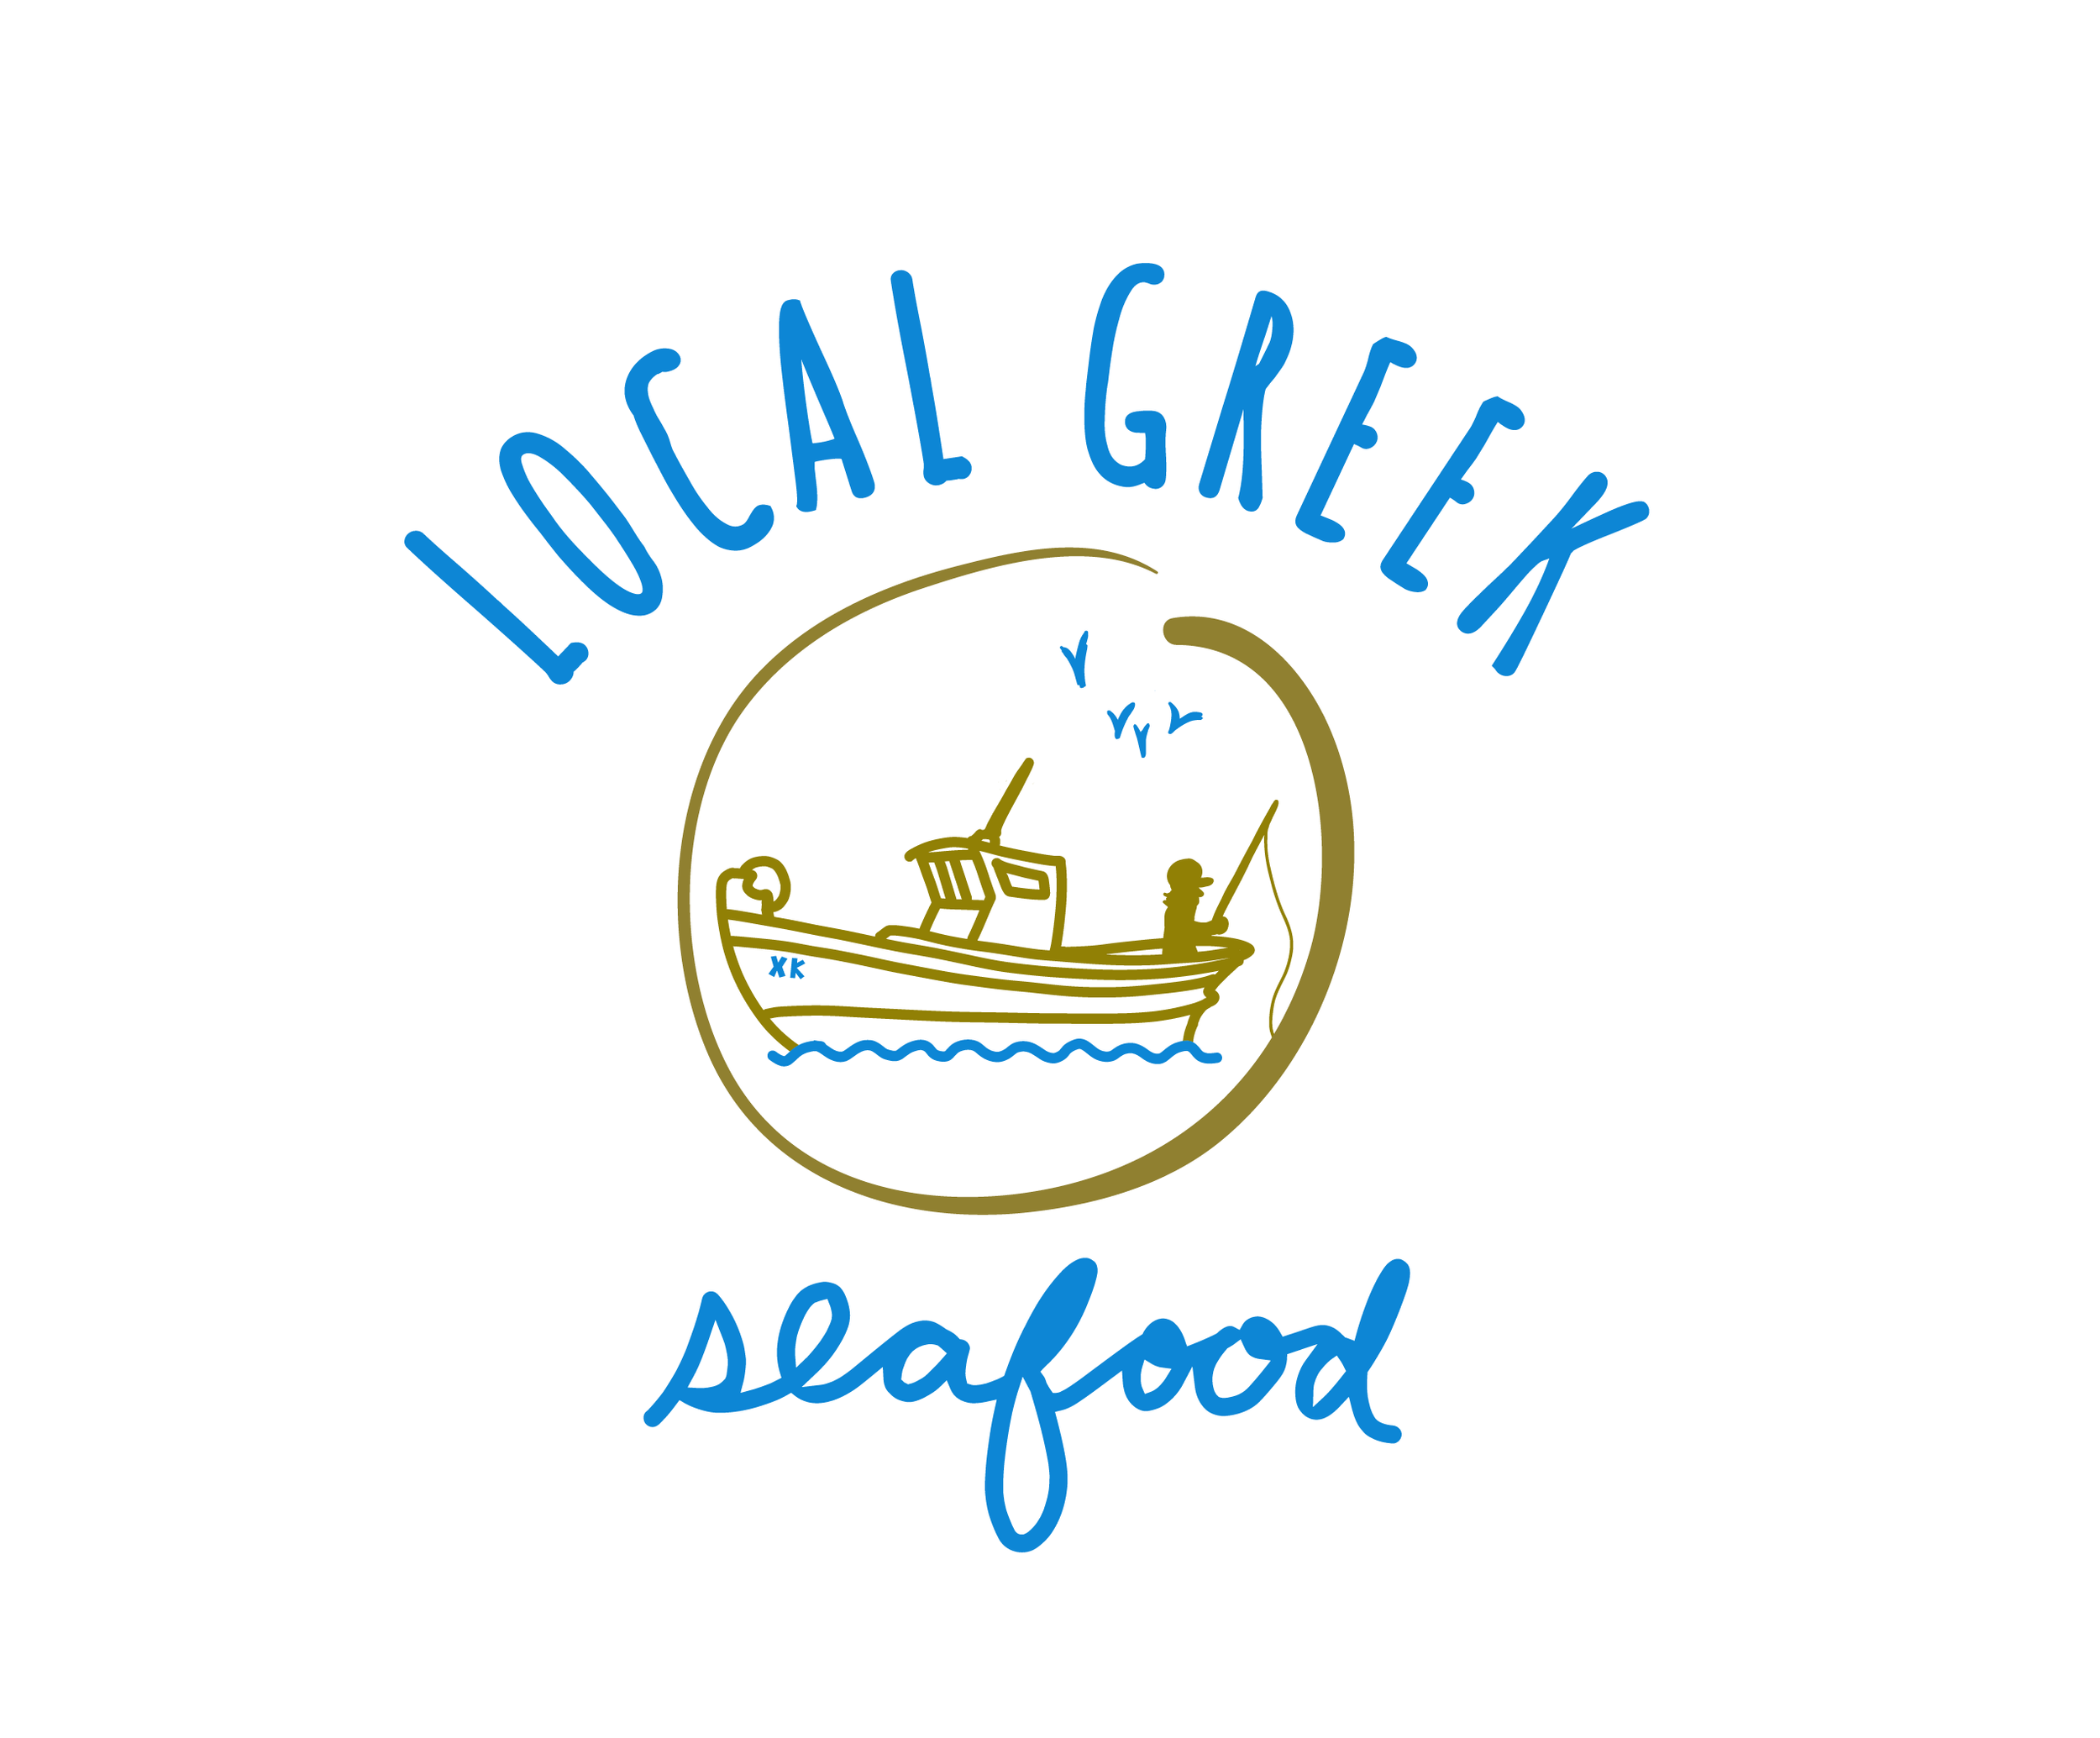 Local Greek Seafood